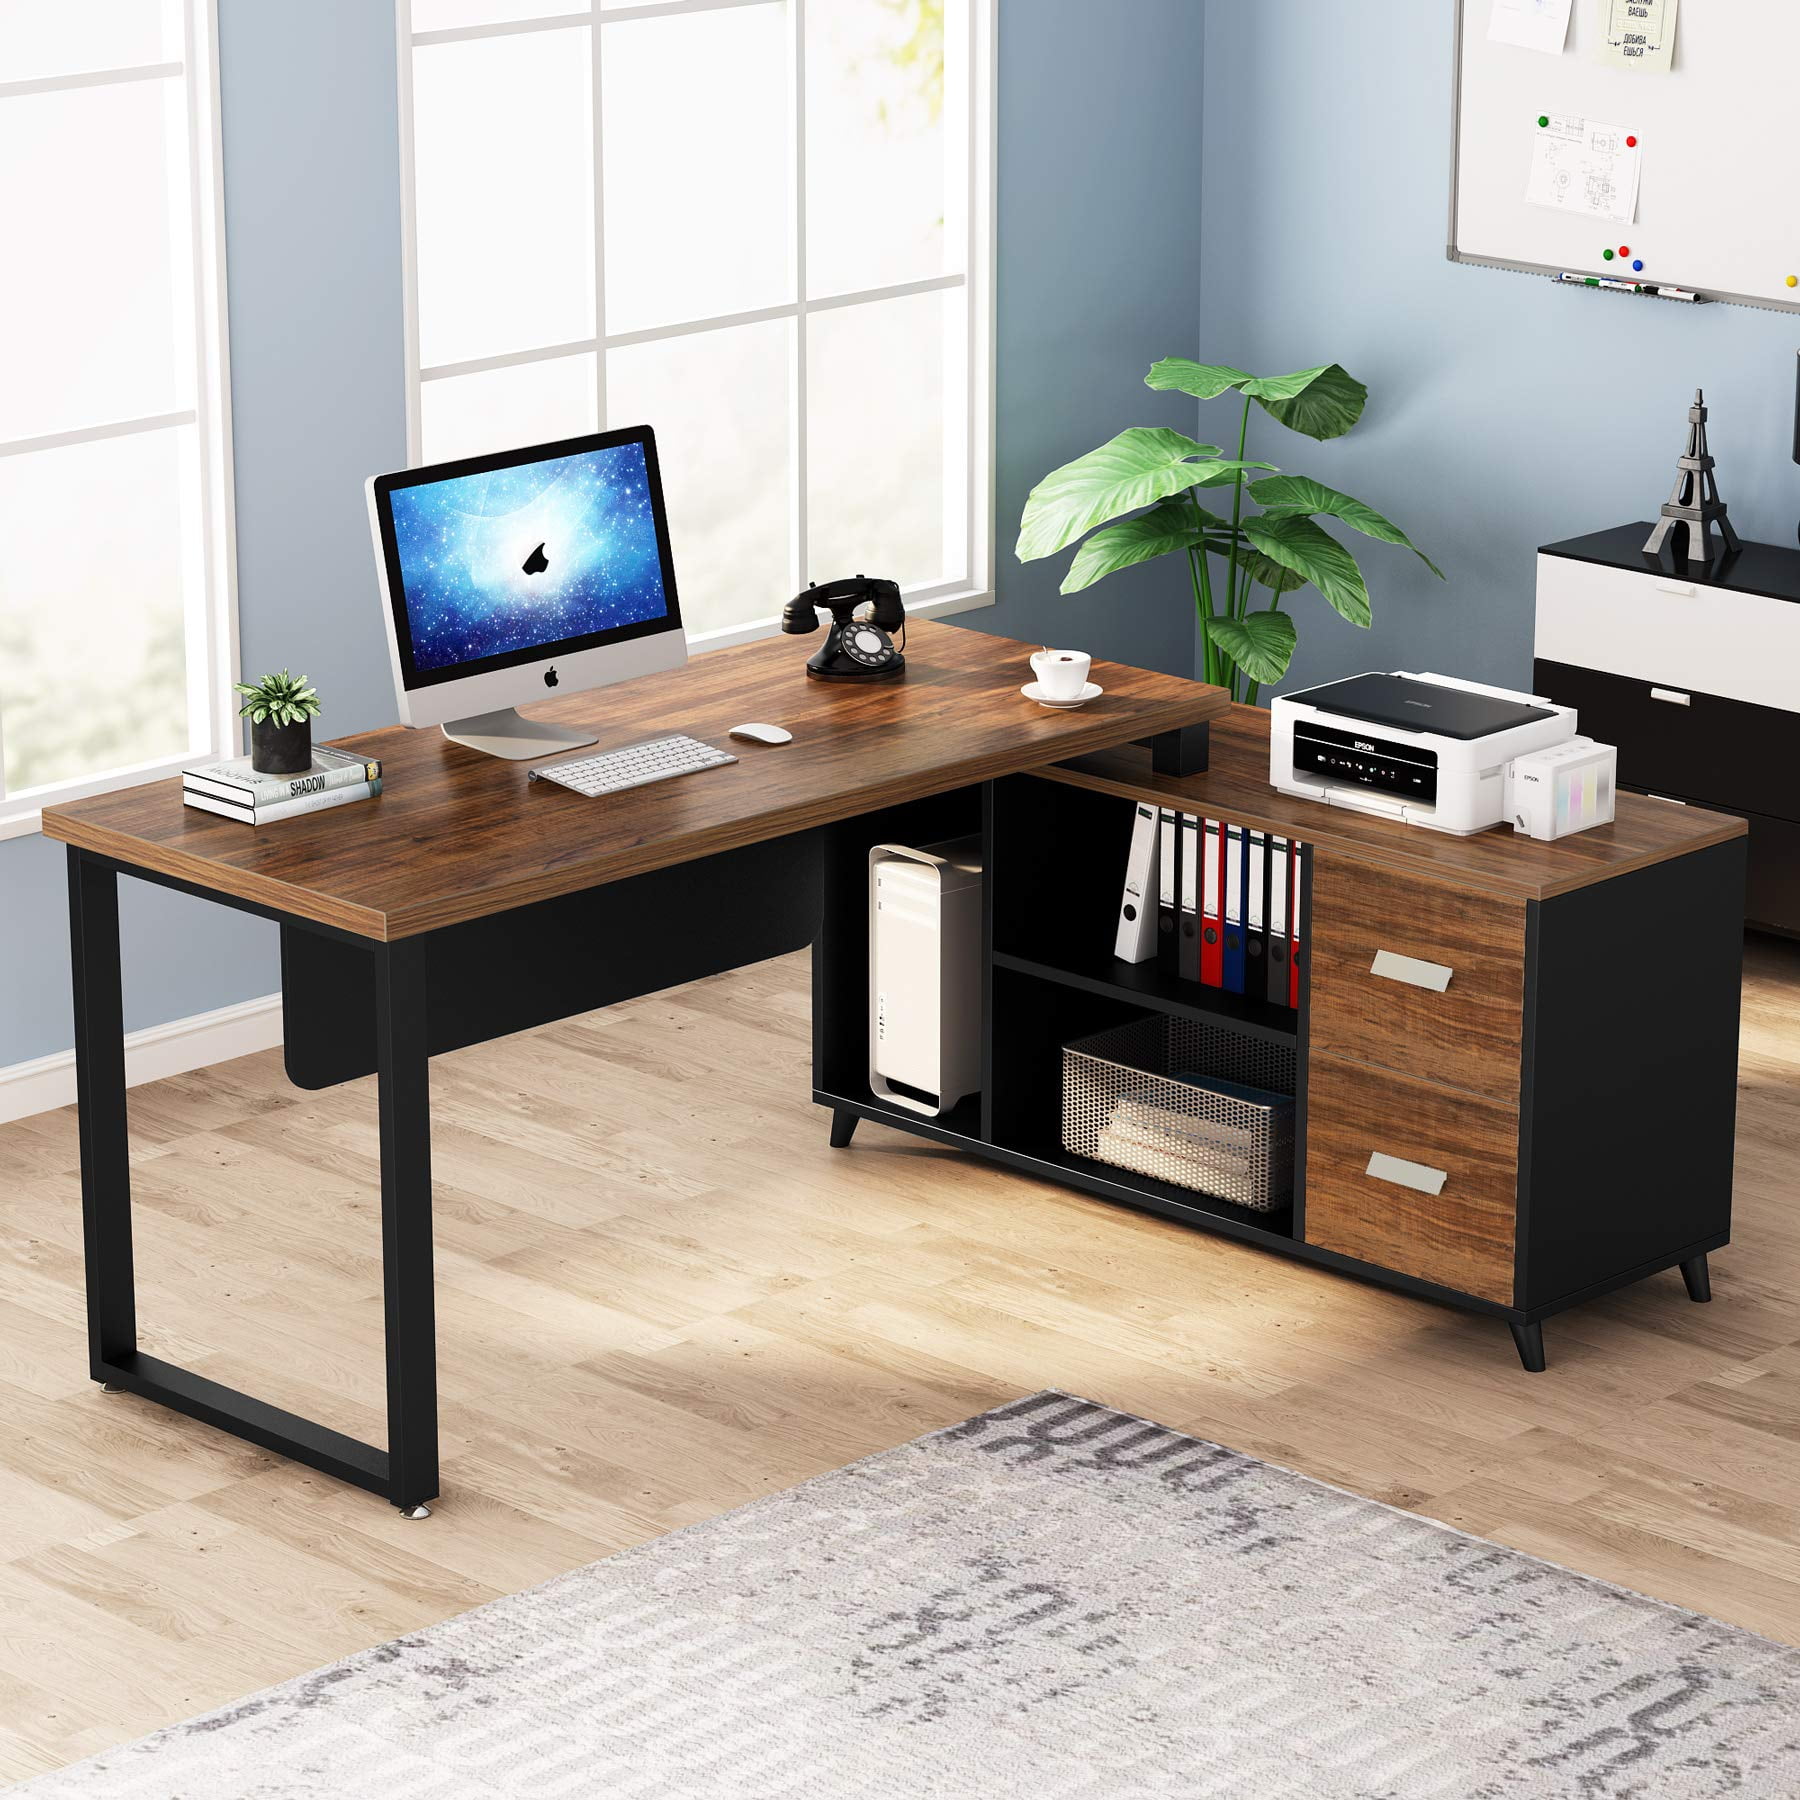 Pc world desks and workstations